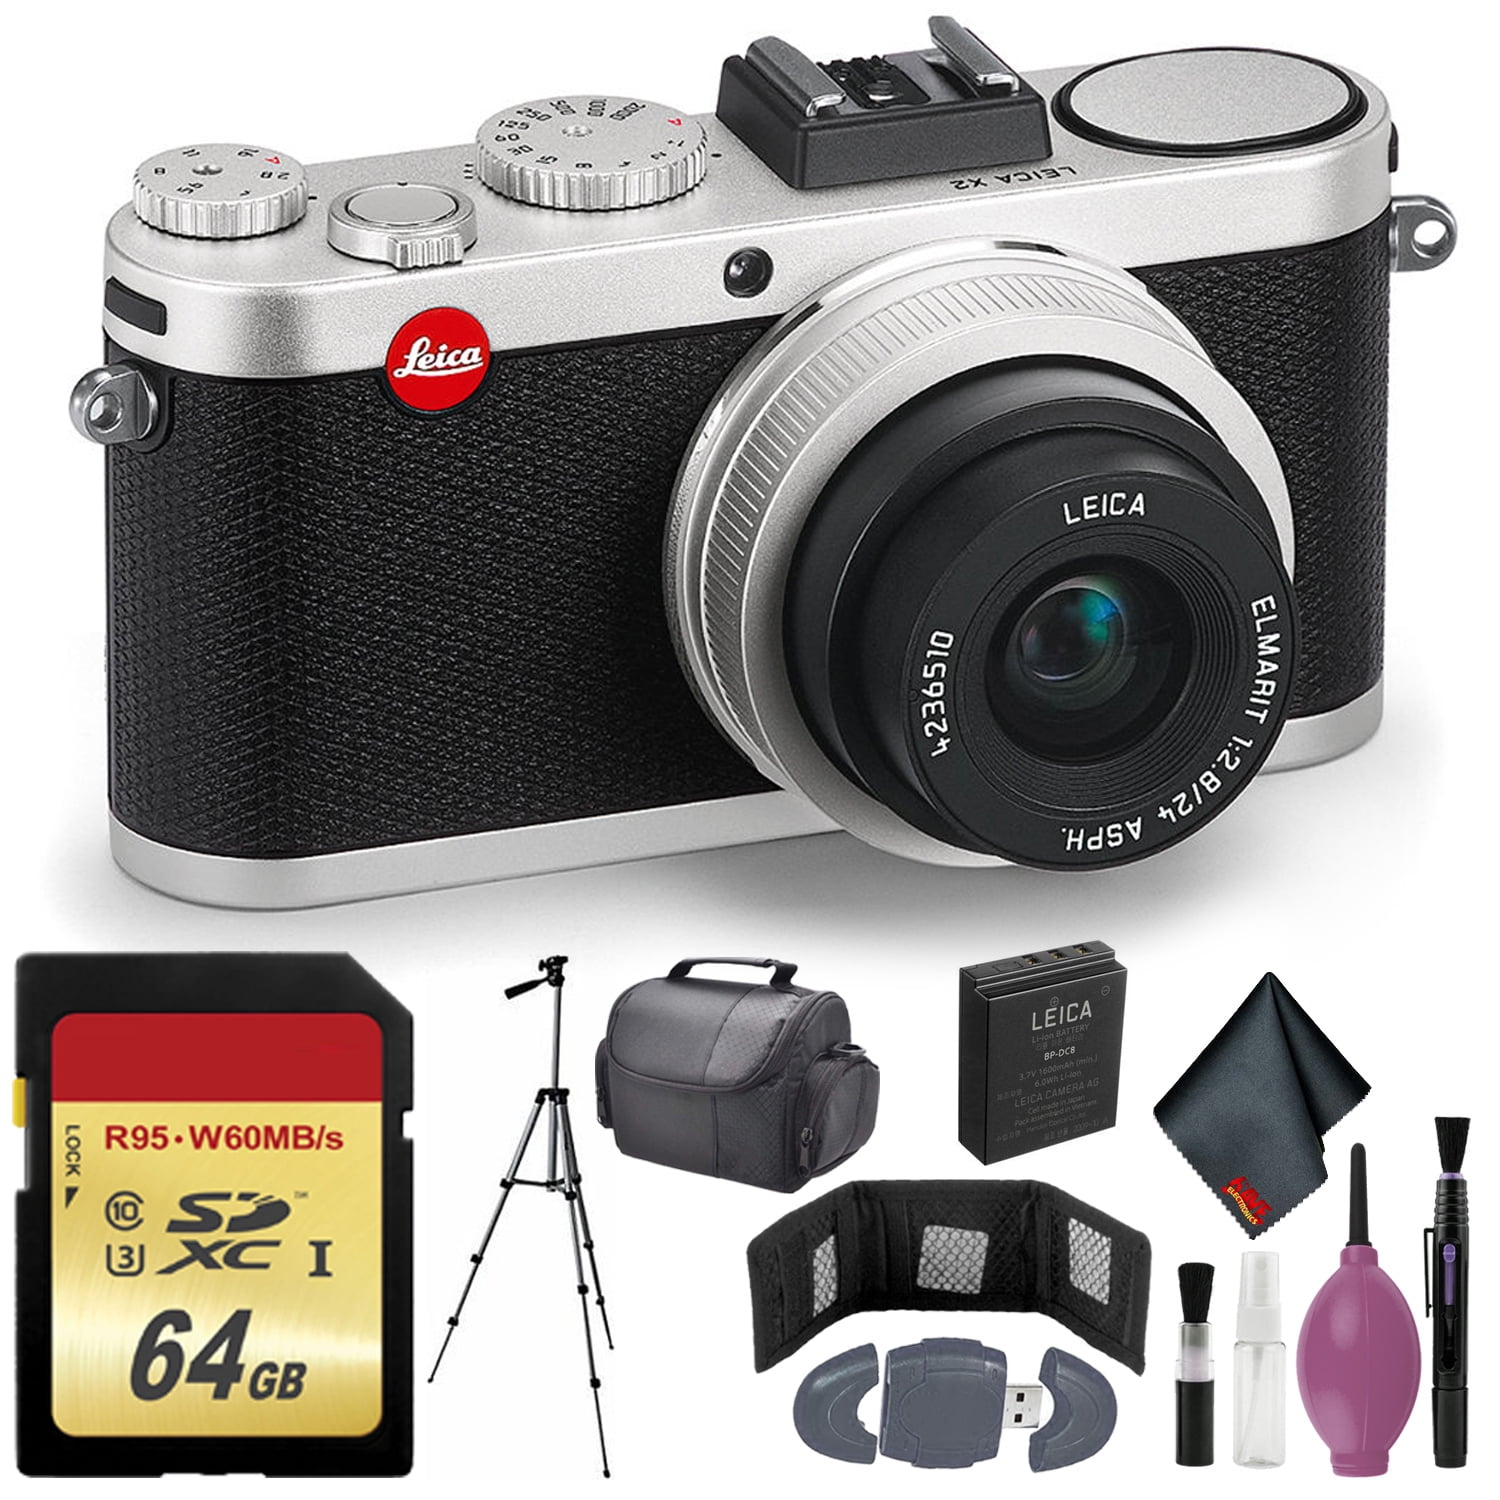 Staple Ray social Leica X2 Digital Compact Camera With Elmarit 24mm f/2.8 ASPH Lens Silver -  64GB - Memory Card Wallet & Reader - 72" Tripod - Case - Walmart.com